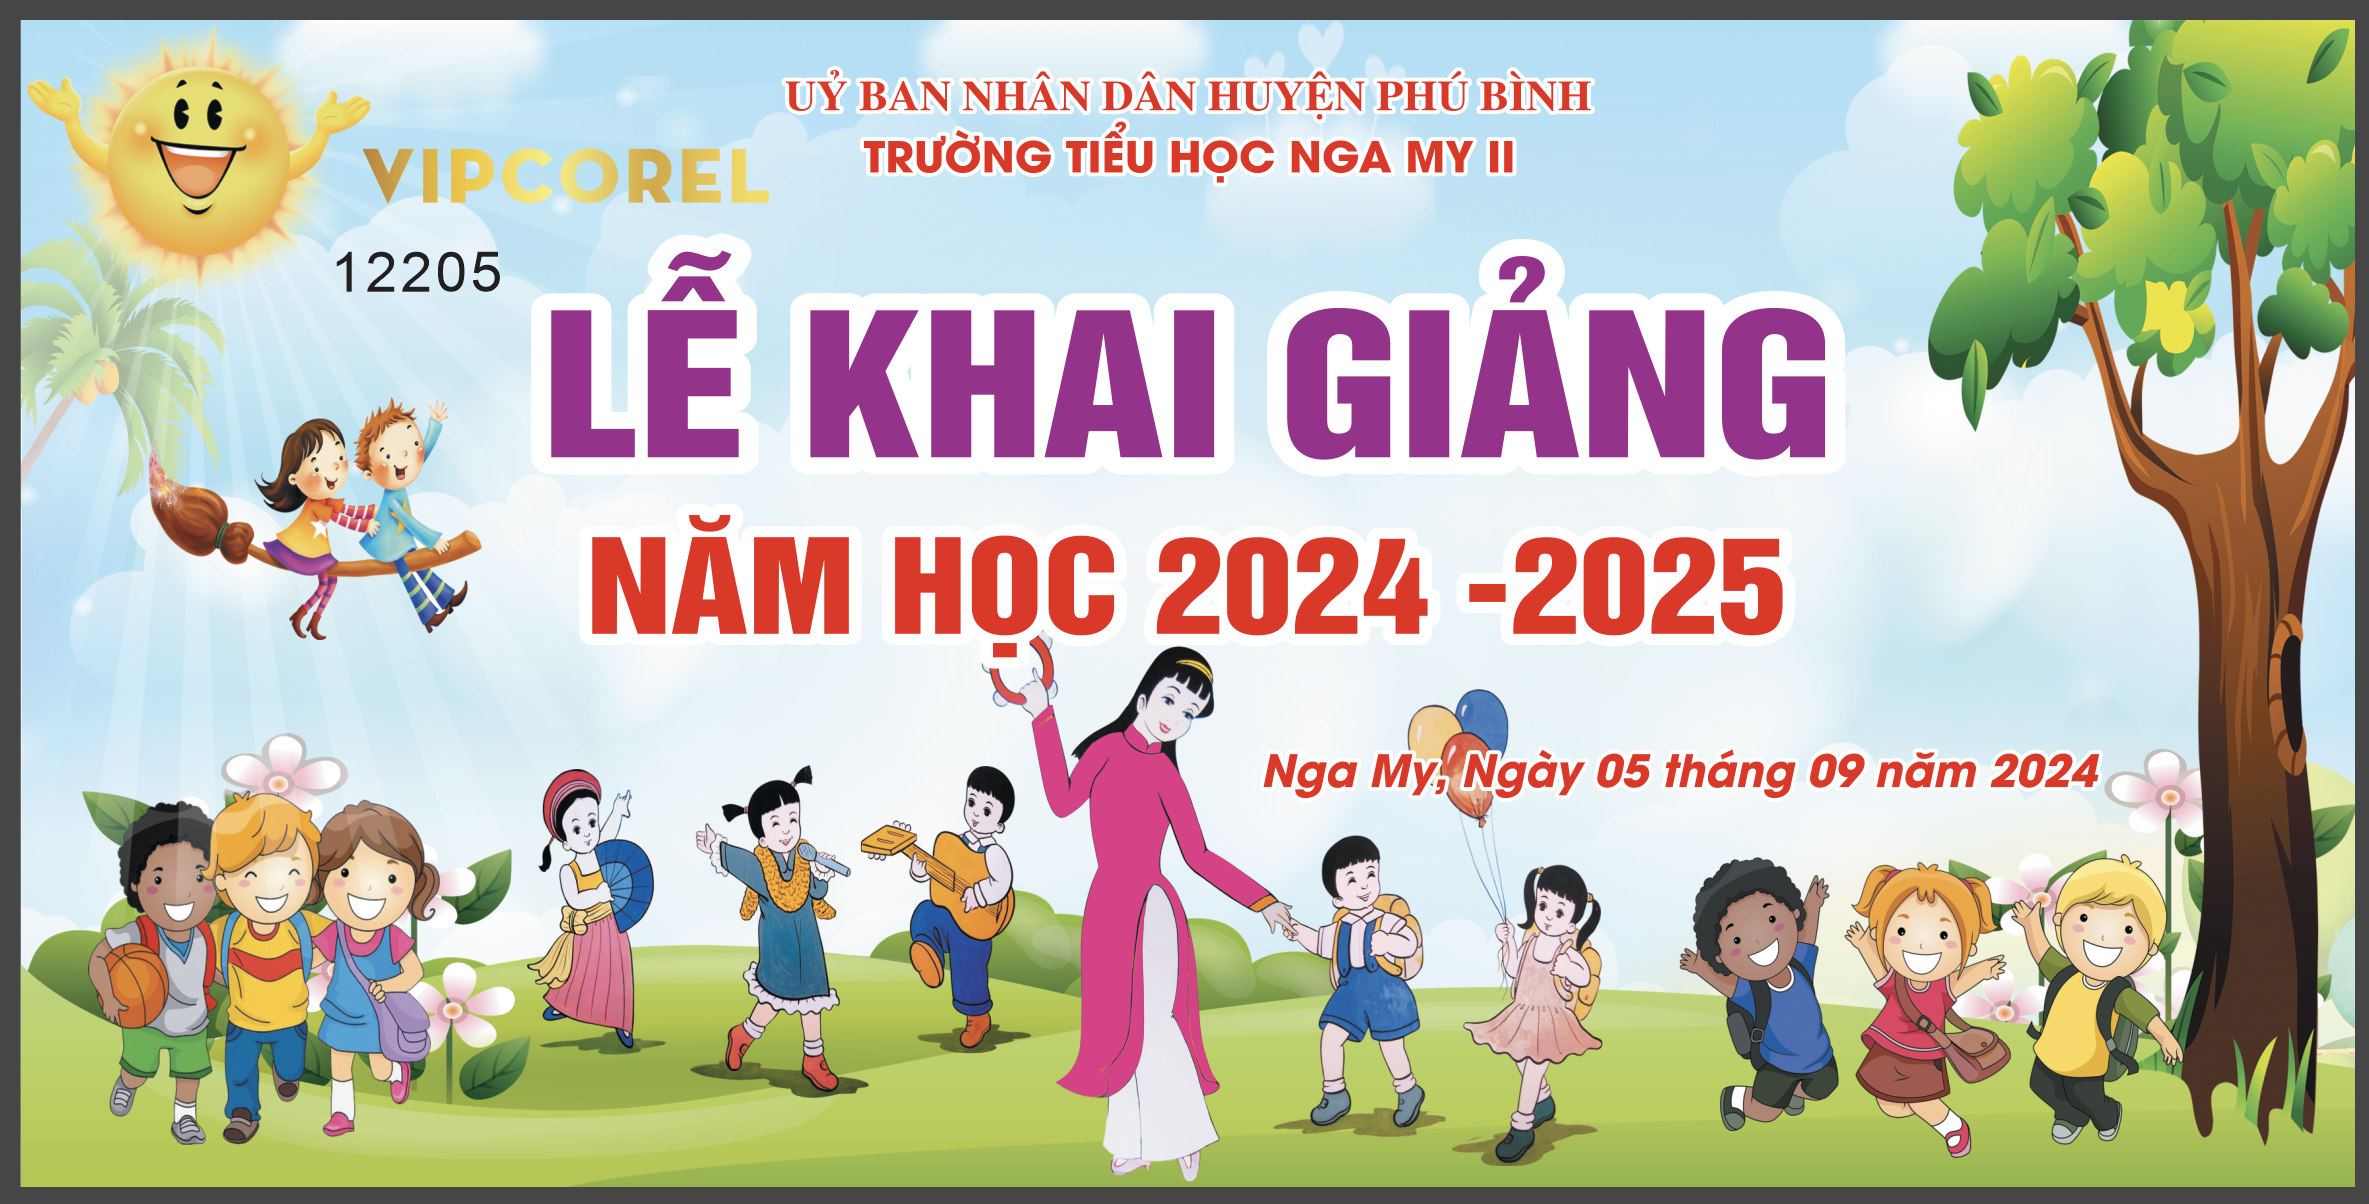 le khai giang 2024-2025 truong tieu hoc #4.png